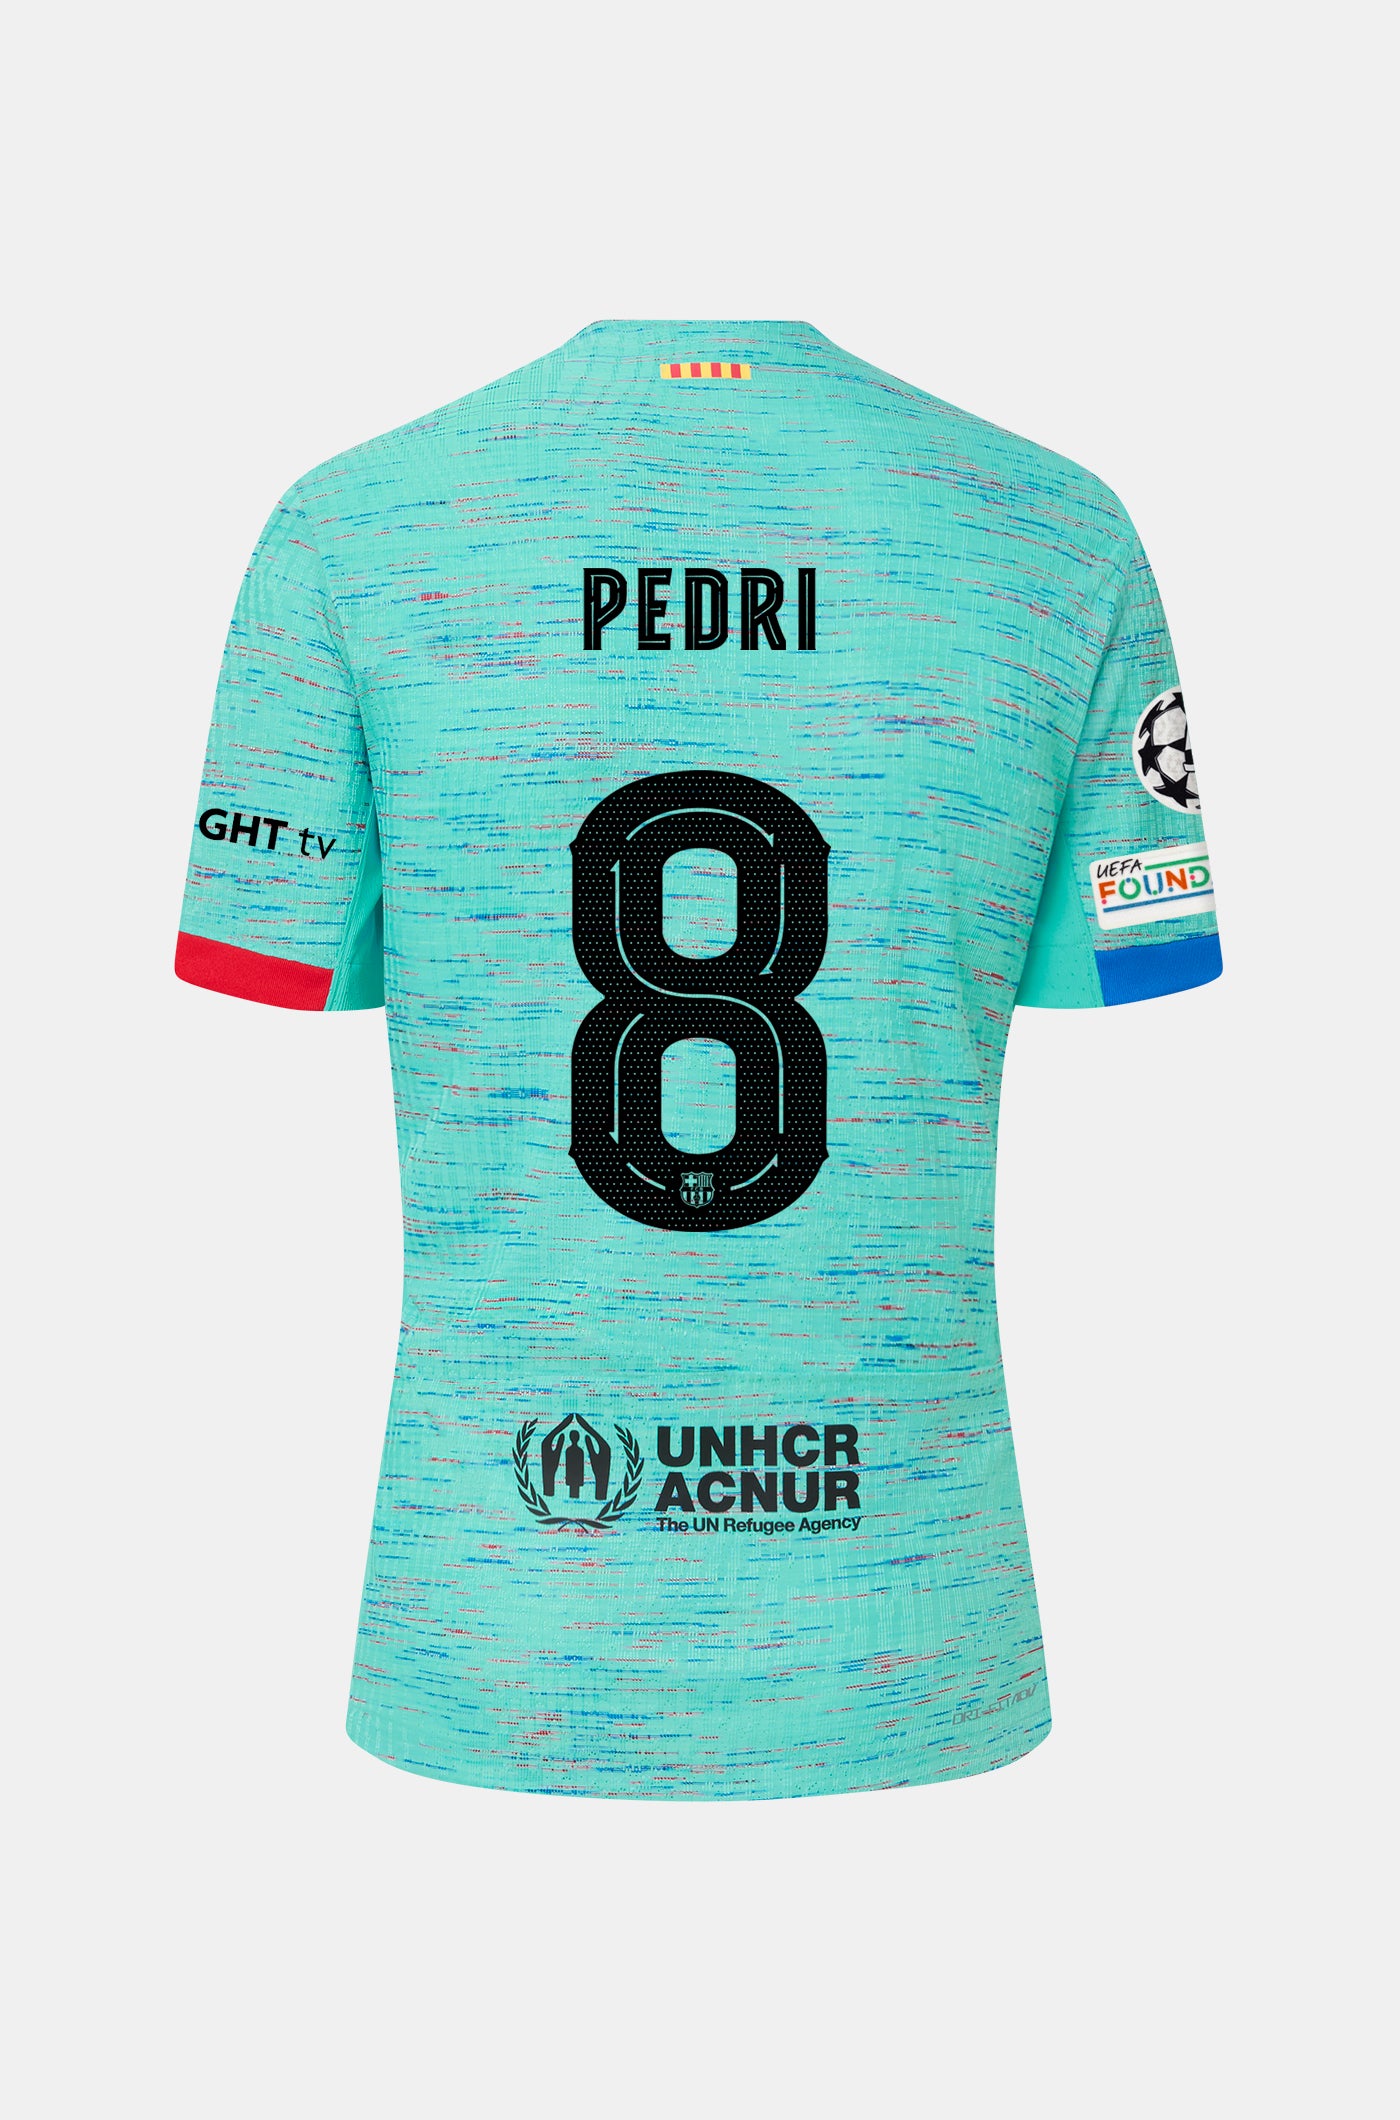 UCL FC Barcelona third shirt 23/24 Player’s Edition - PEDRI